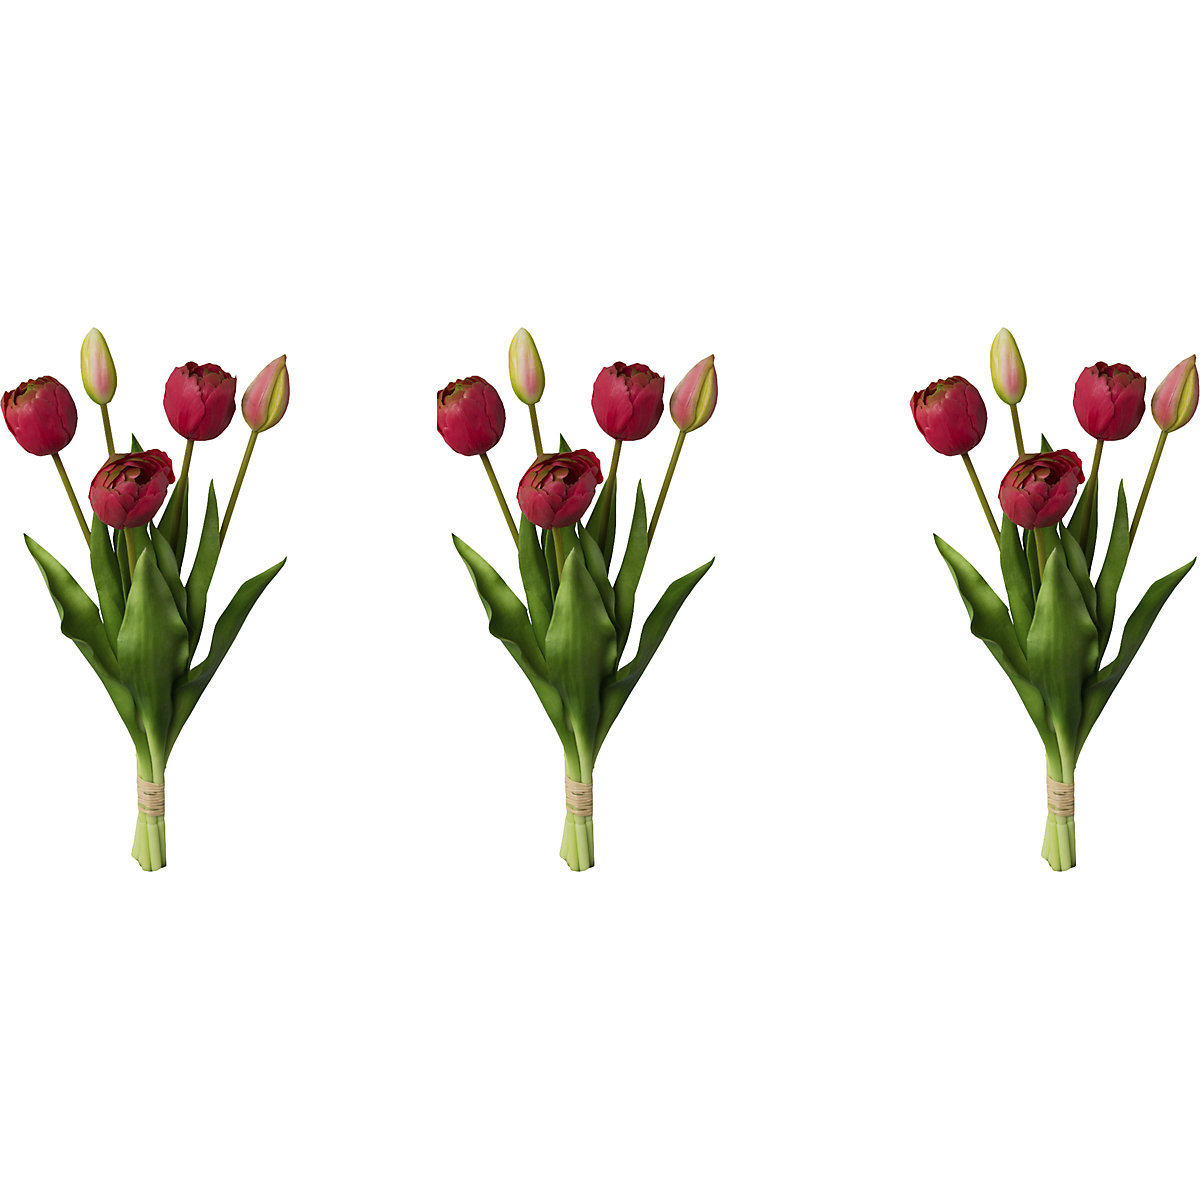 Tulipanes rellenos, real touch, manojo de 5